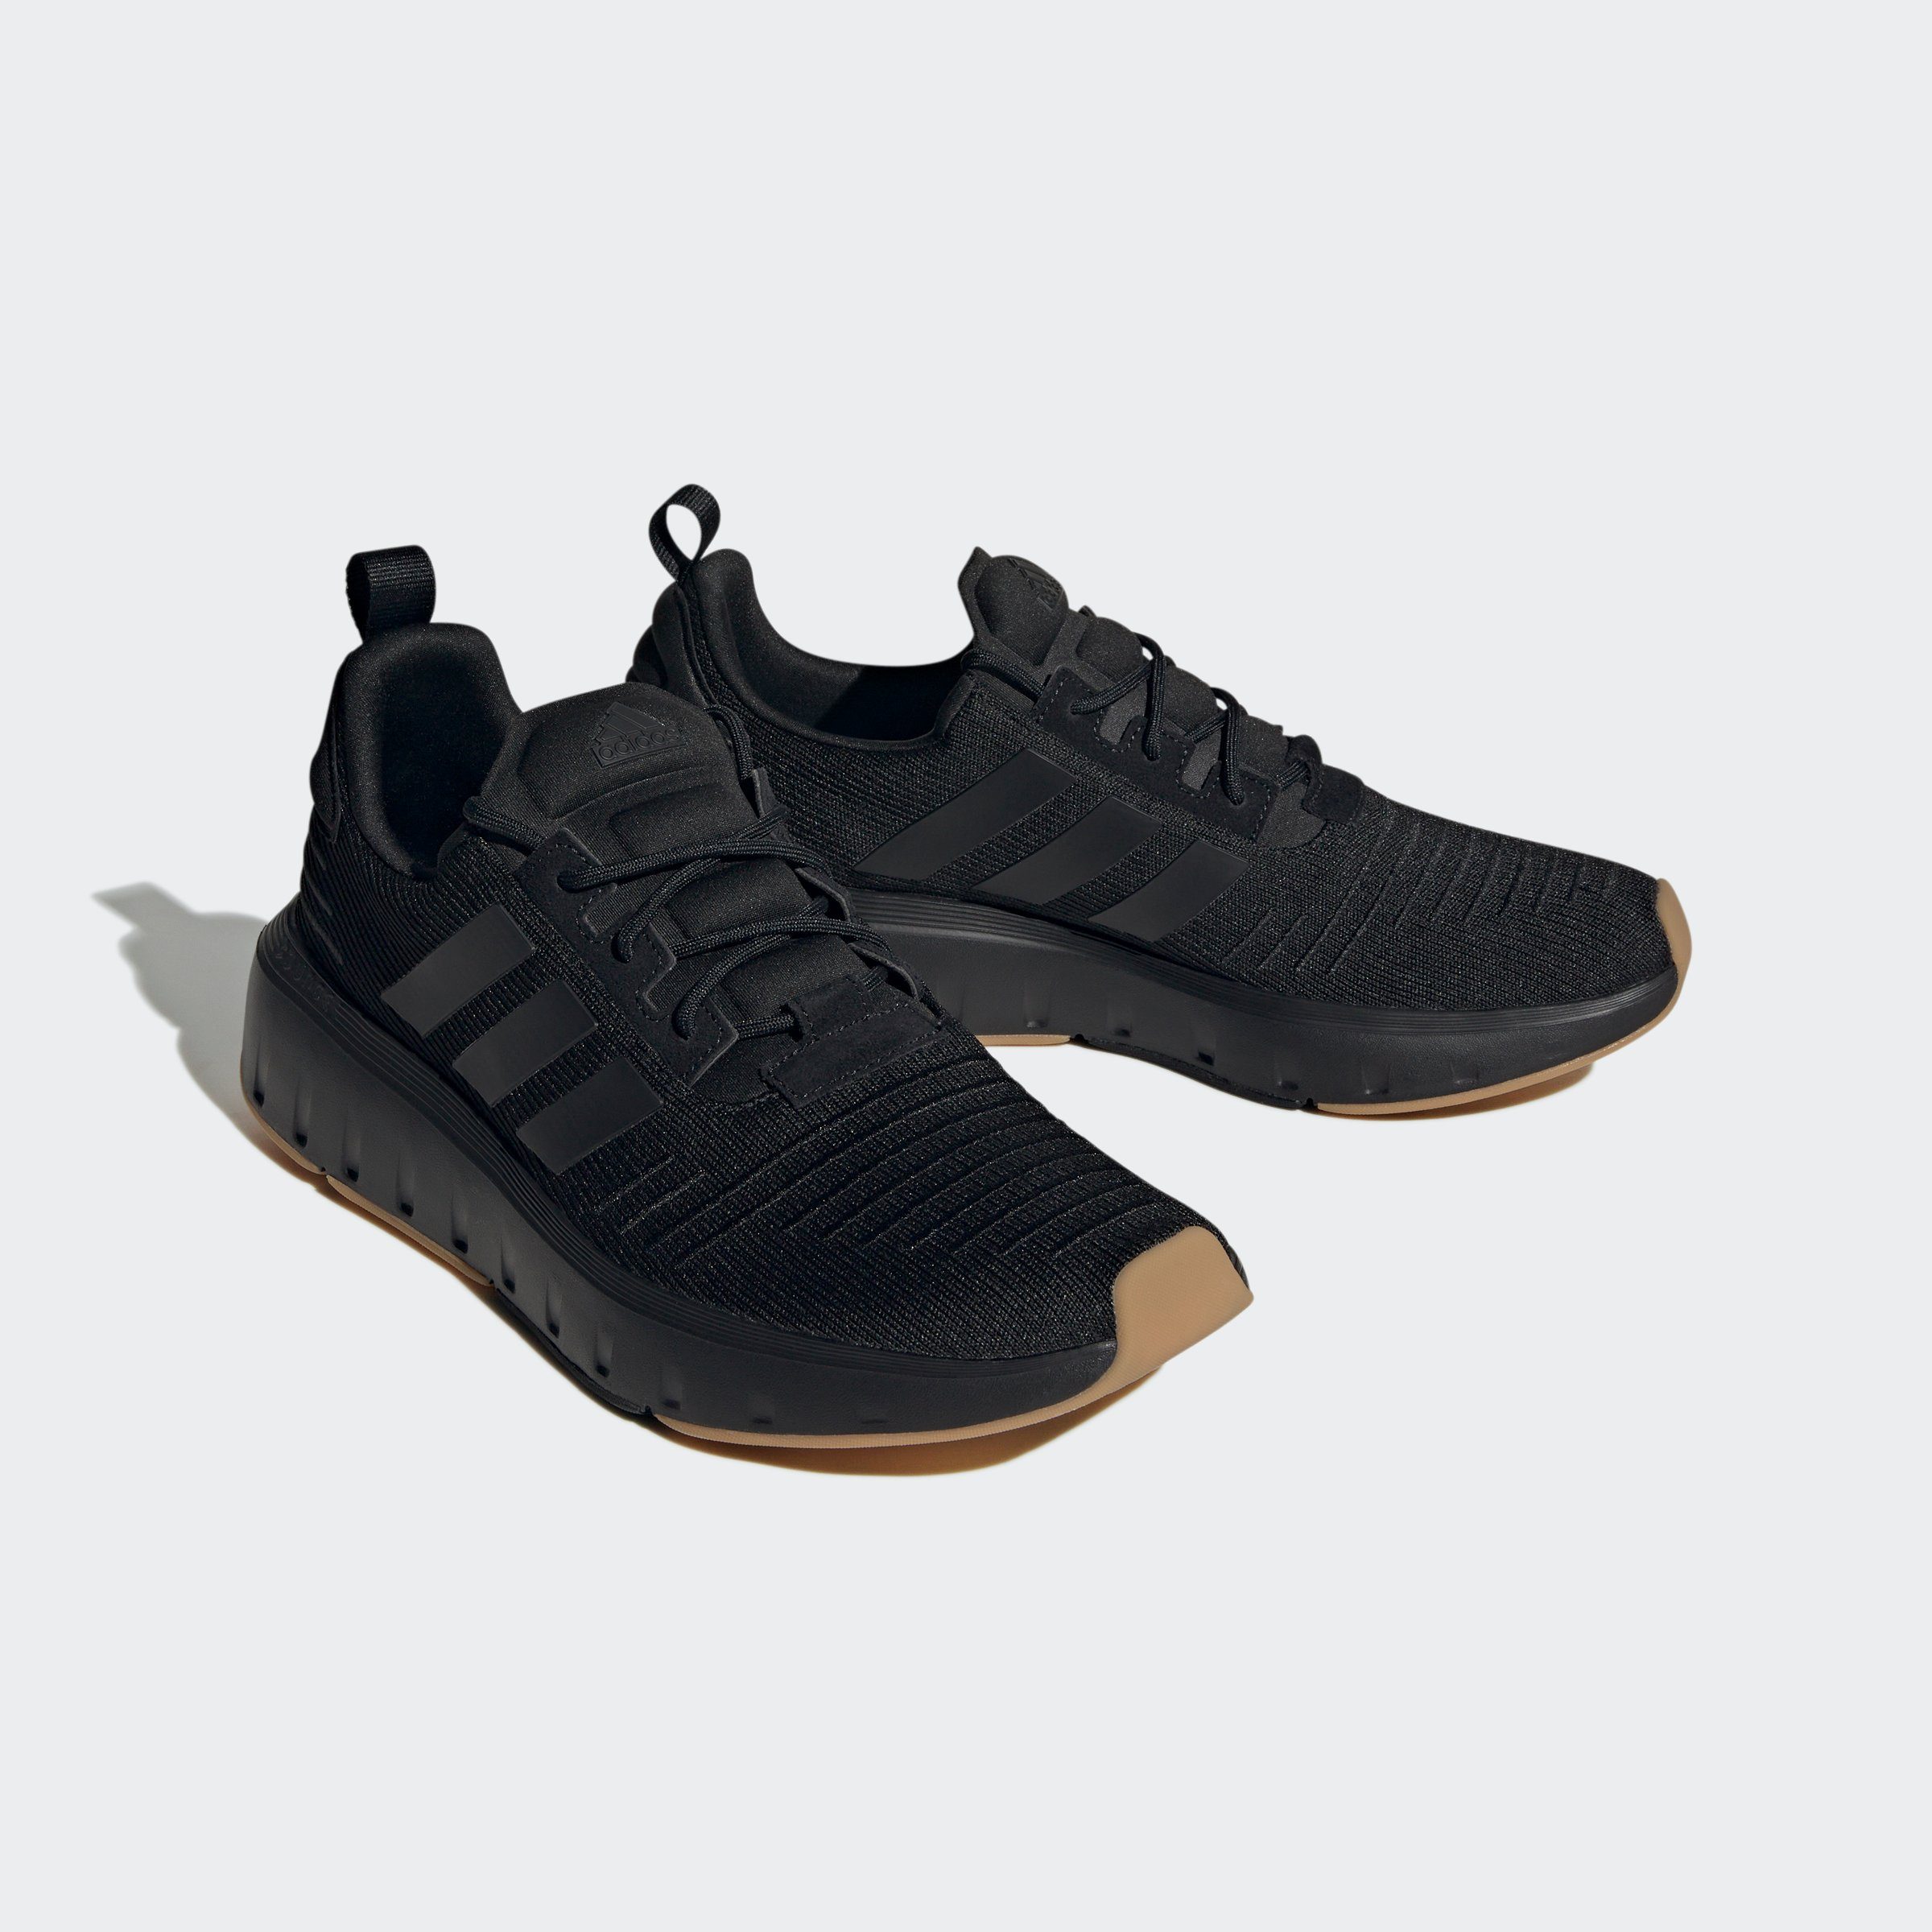 RUN Core Black Black Core Gum 3 / Sportswear Sneaker / adidas SWIFT